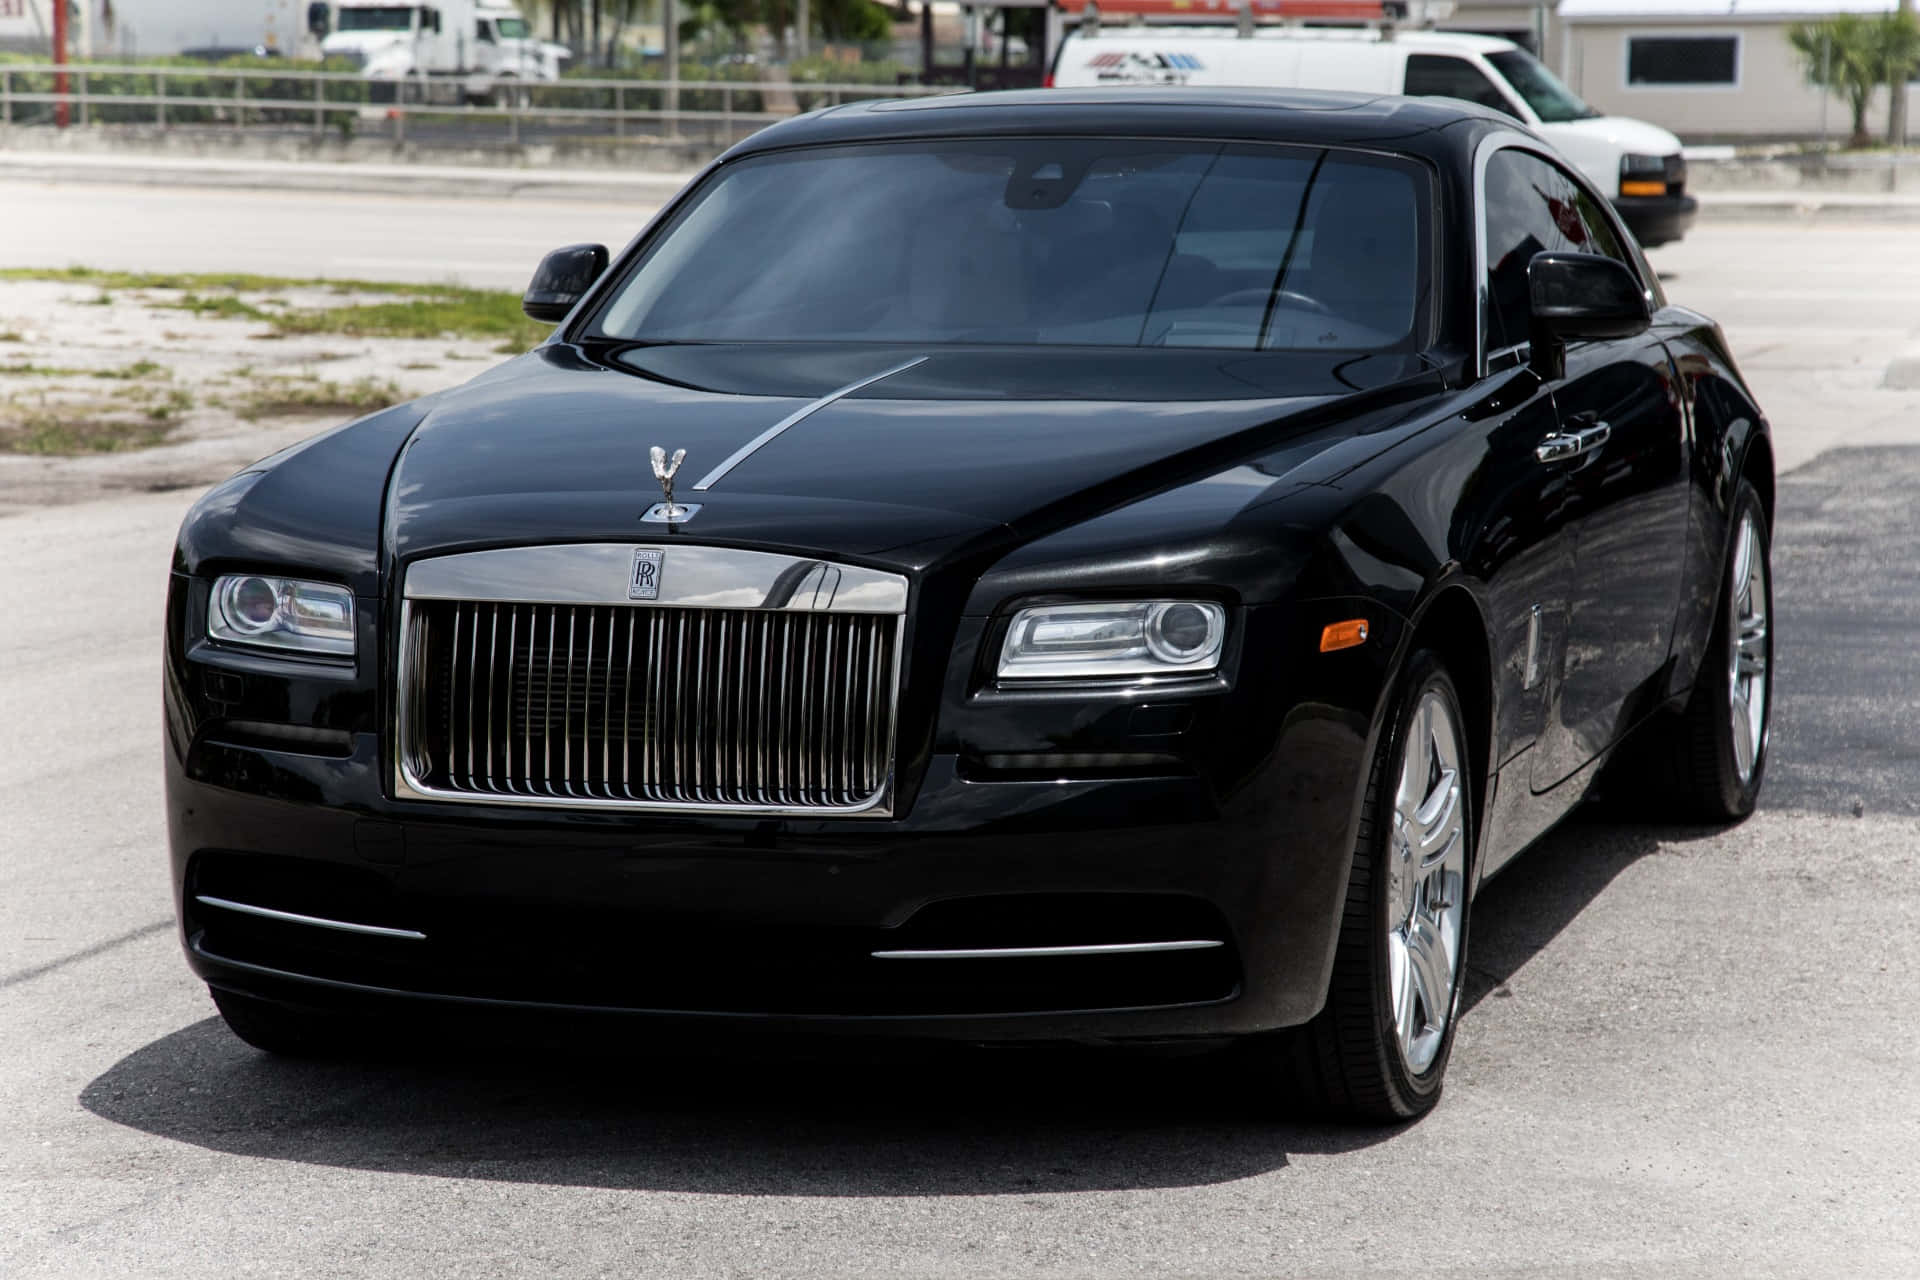 Caption: Elegant Rolls Royce Wraith Parked Under The City Lights Wallpaper